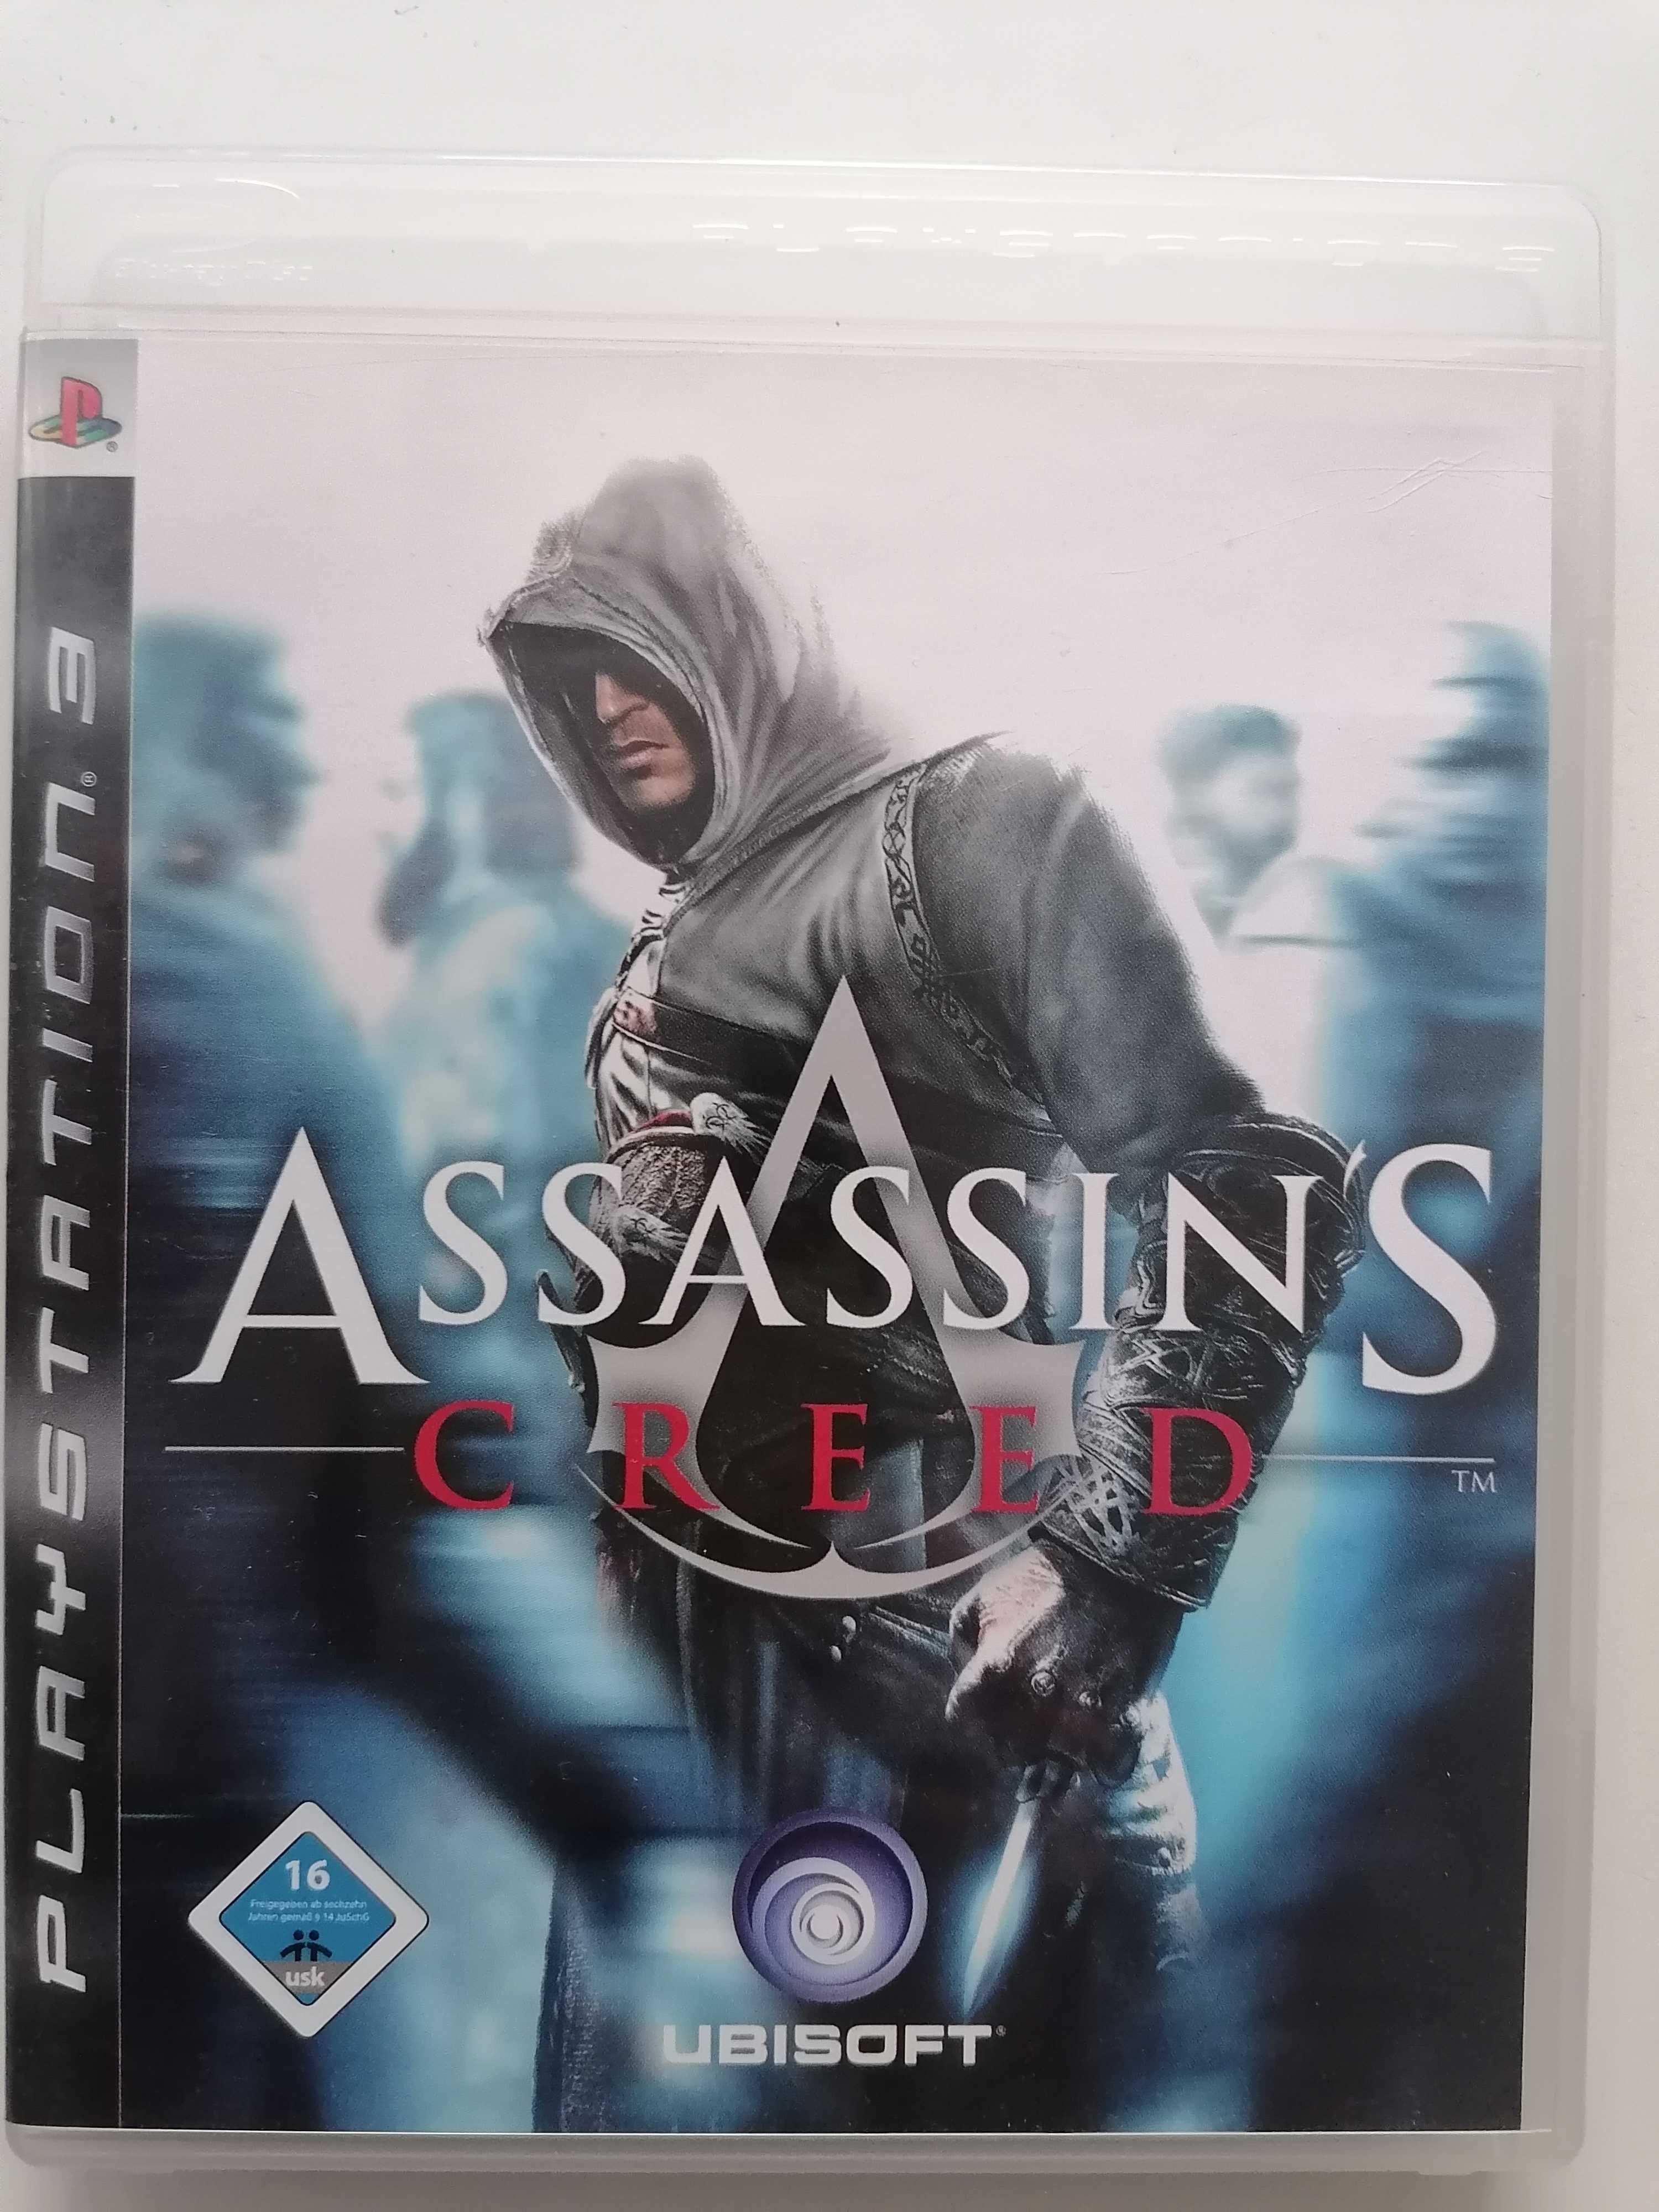 Assassin's creed playstation 3 assassin's creed ps3